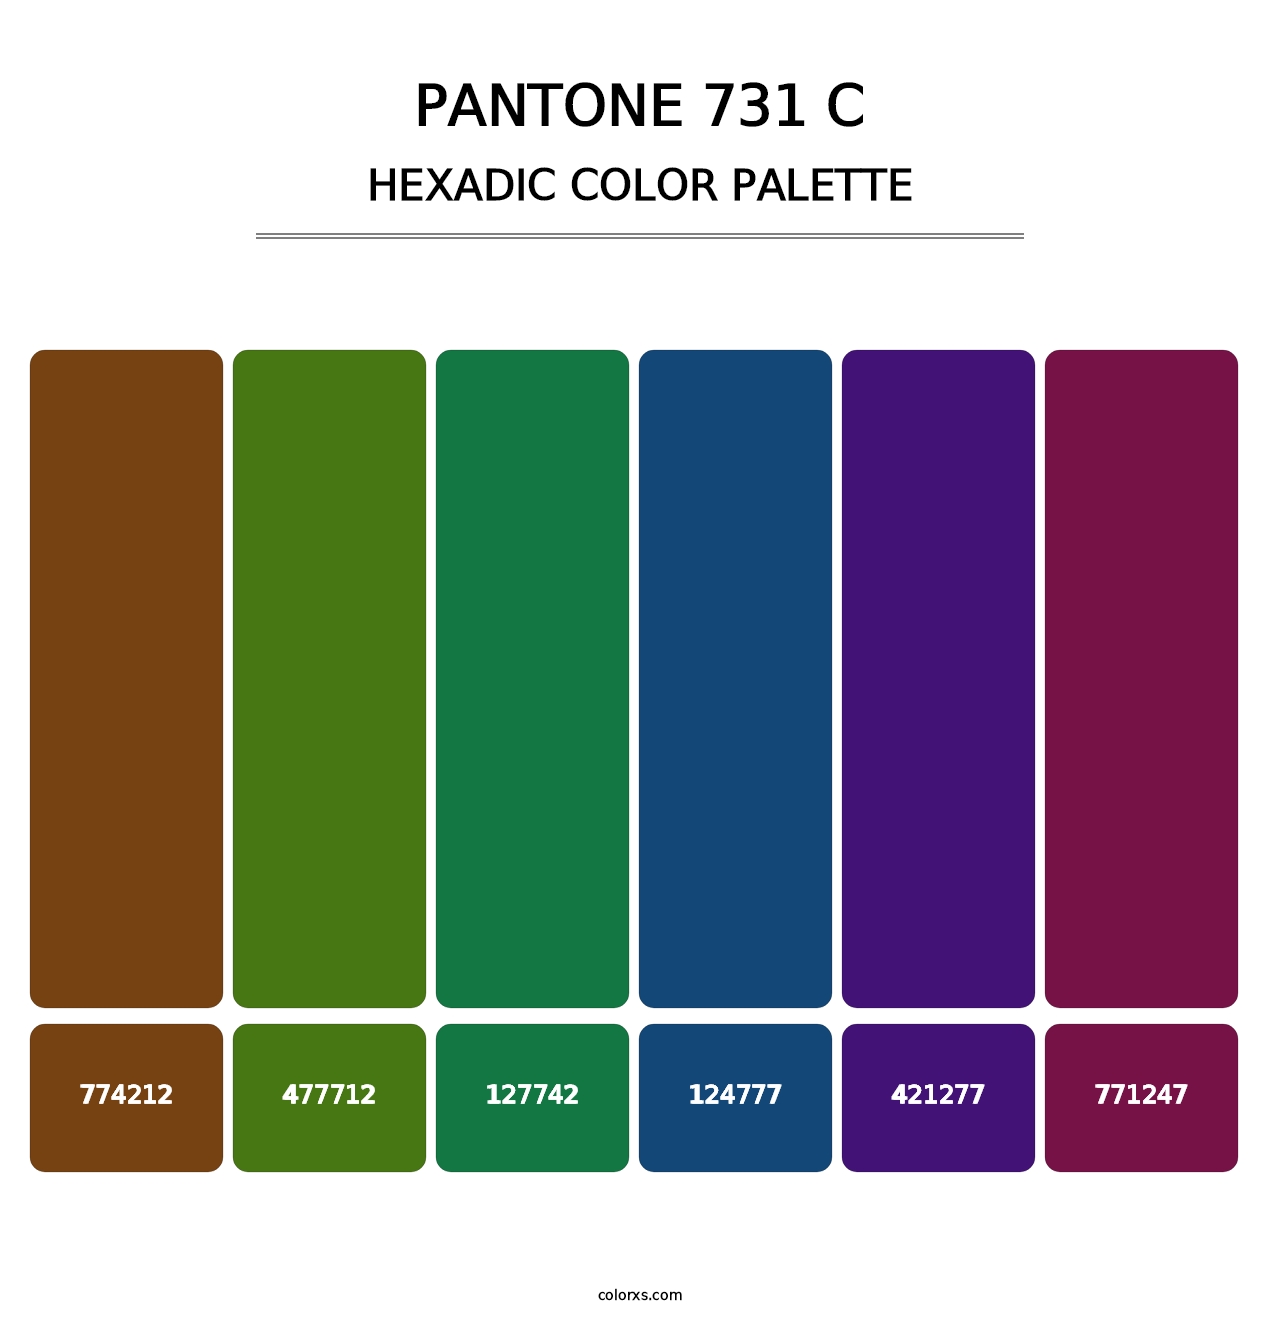 PANTONE 731 C - Hexadic Color Palette